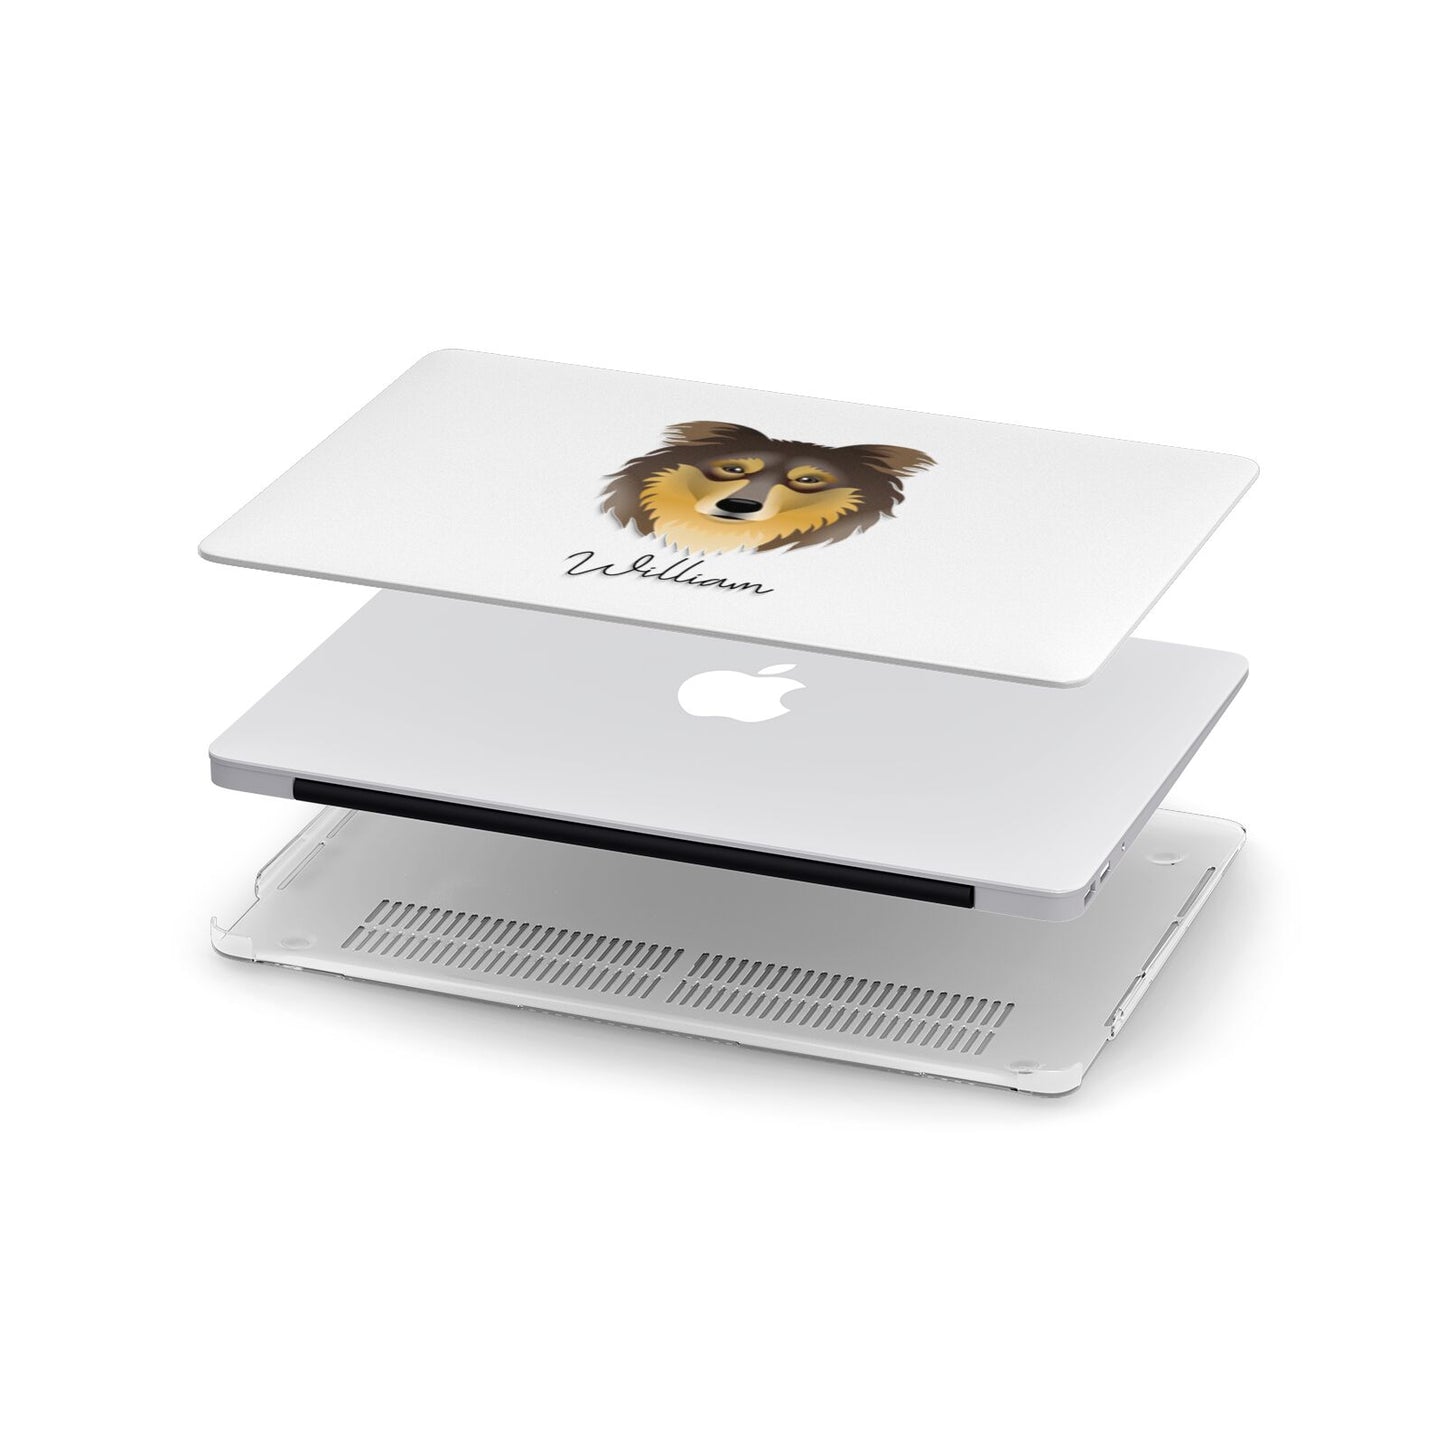 Rough Collie Personalised Apple MacBook Case in Detail